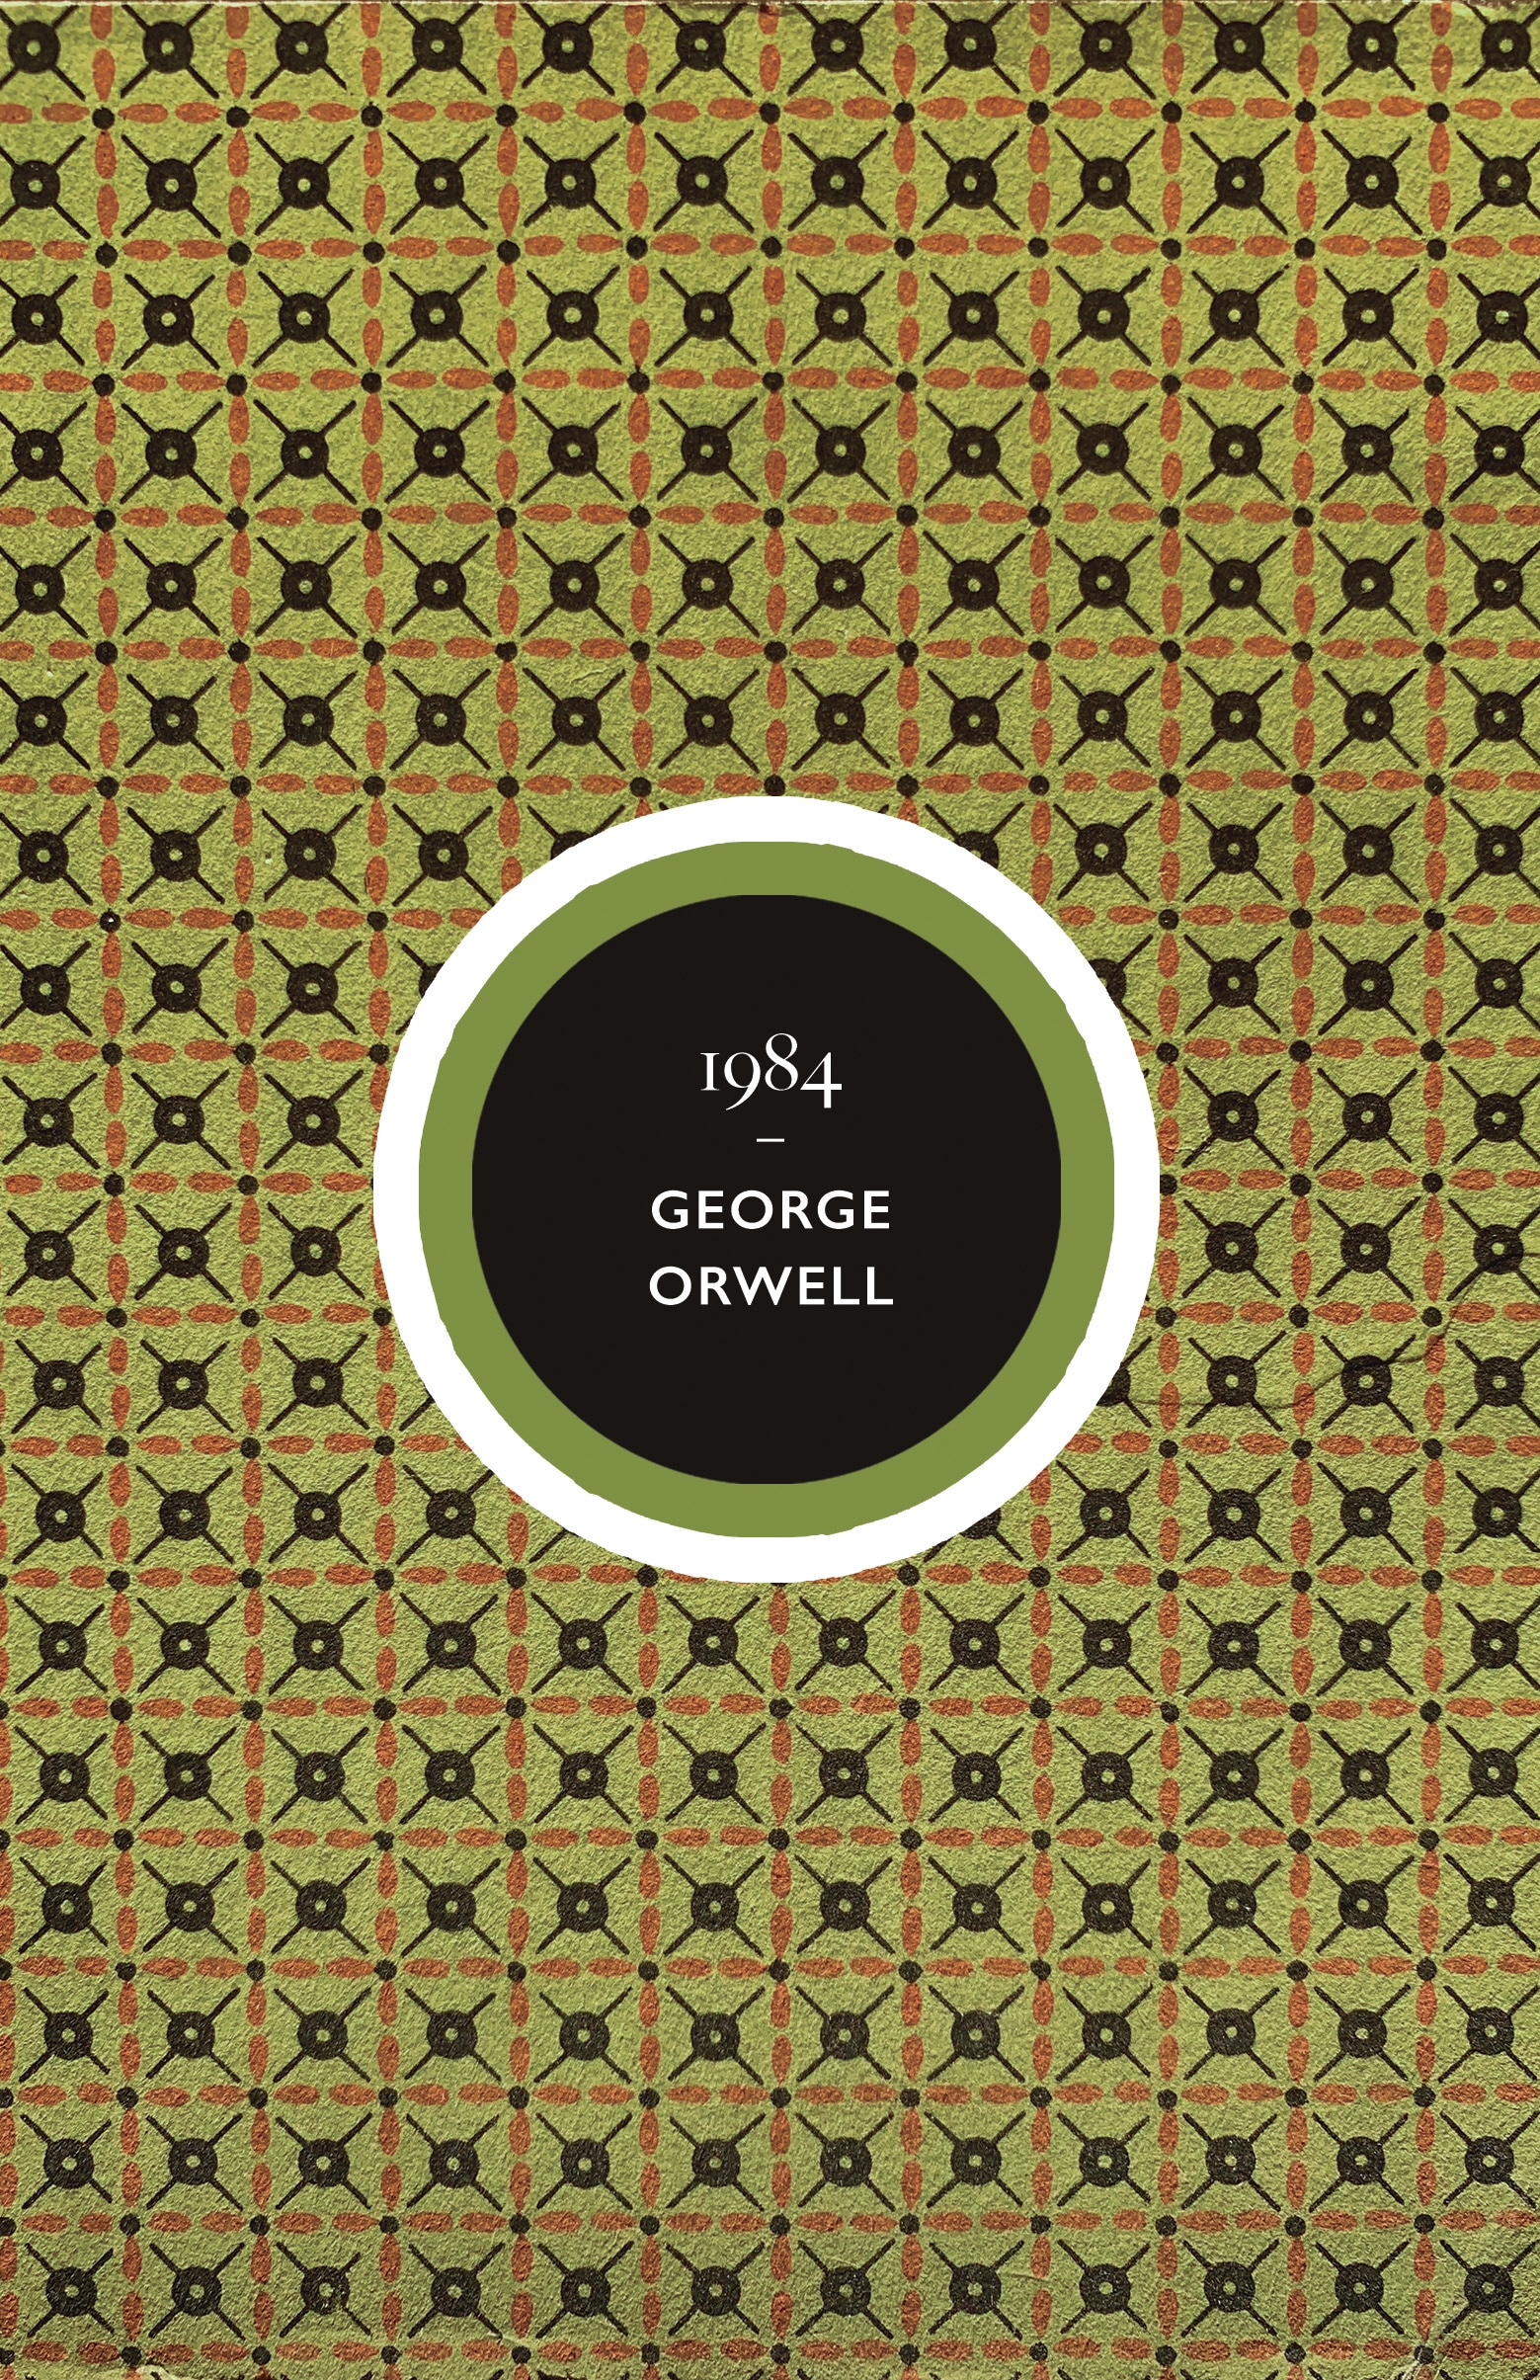 Book “Nineteen Eighty-Four” by George Orwell, Robert Harris — August 13, 2020